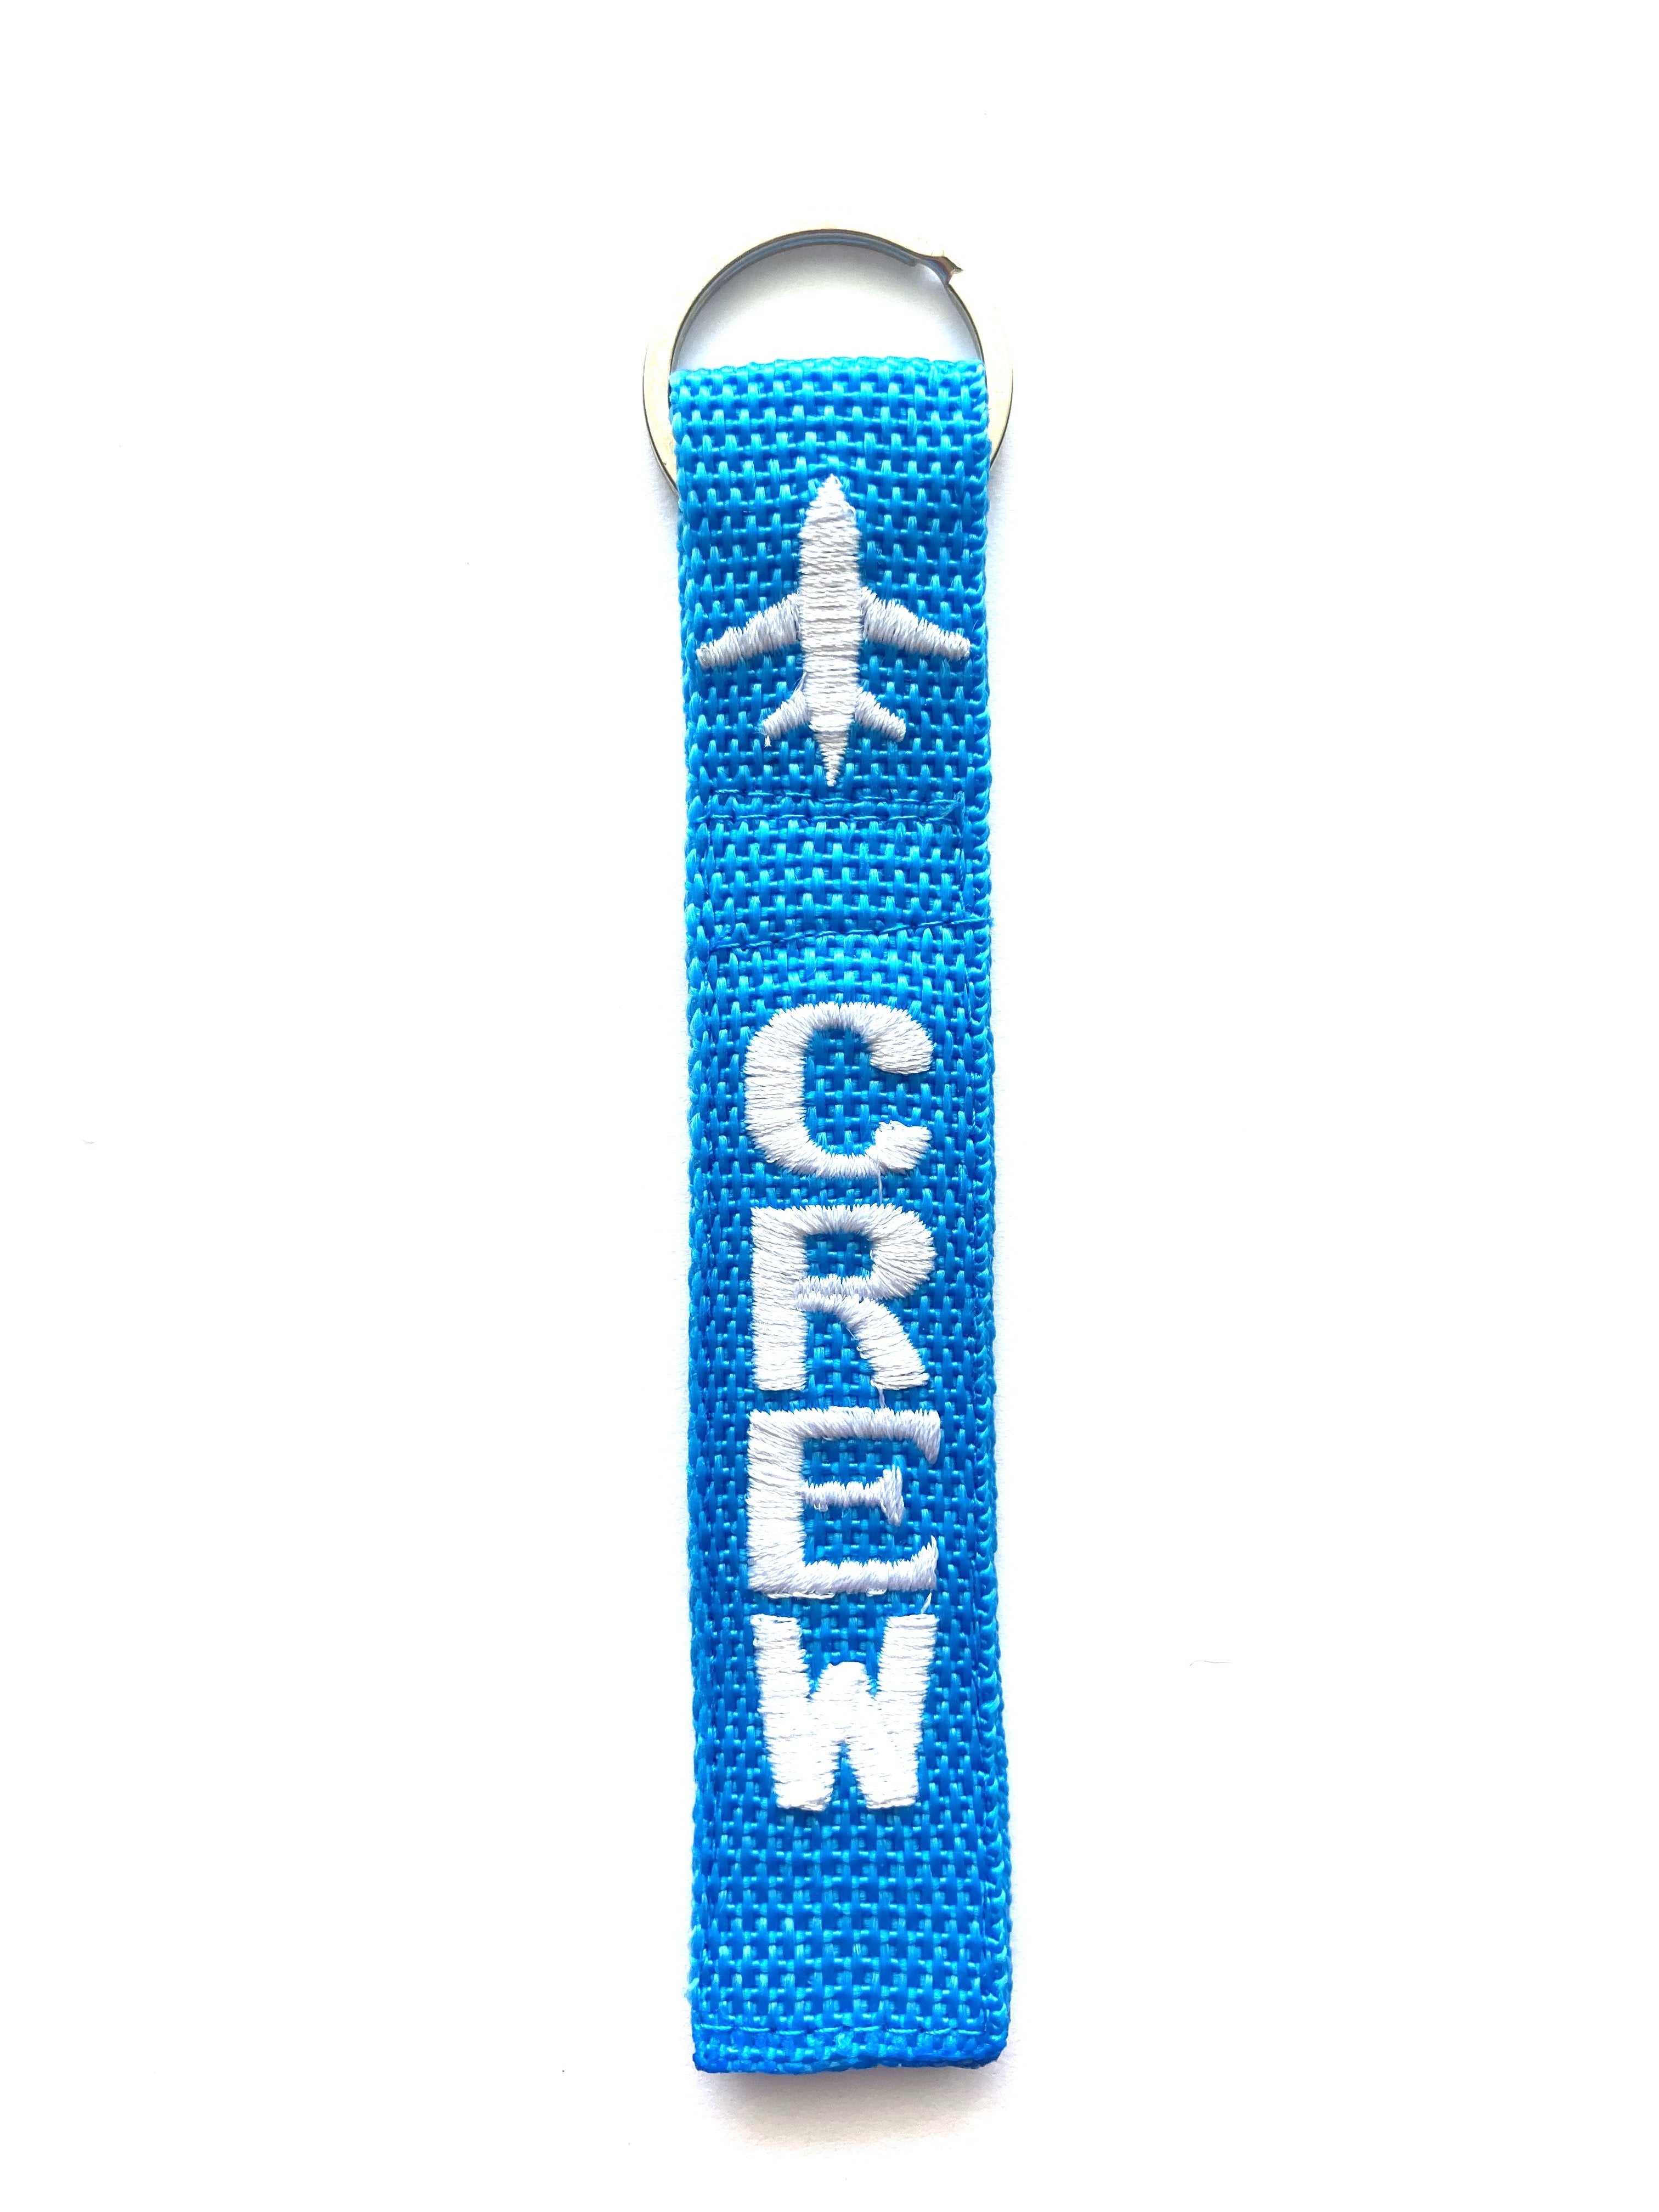 Crew Key Ring Luggage Tag - White on Blue